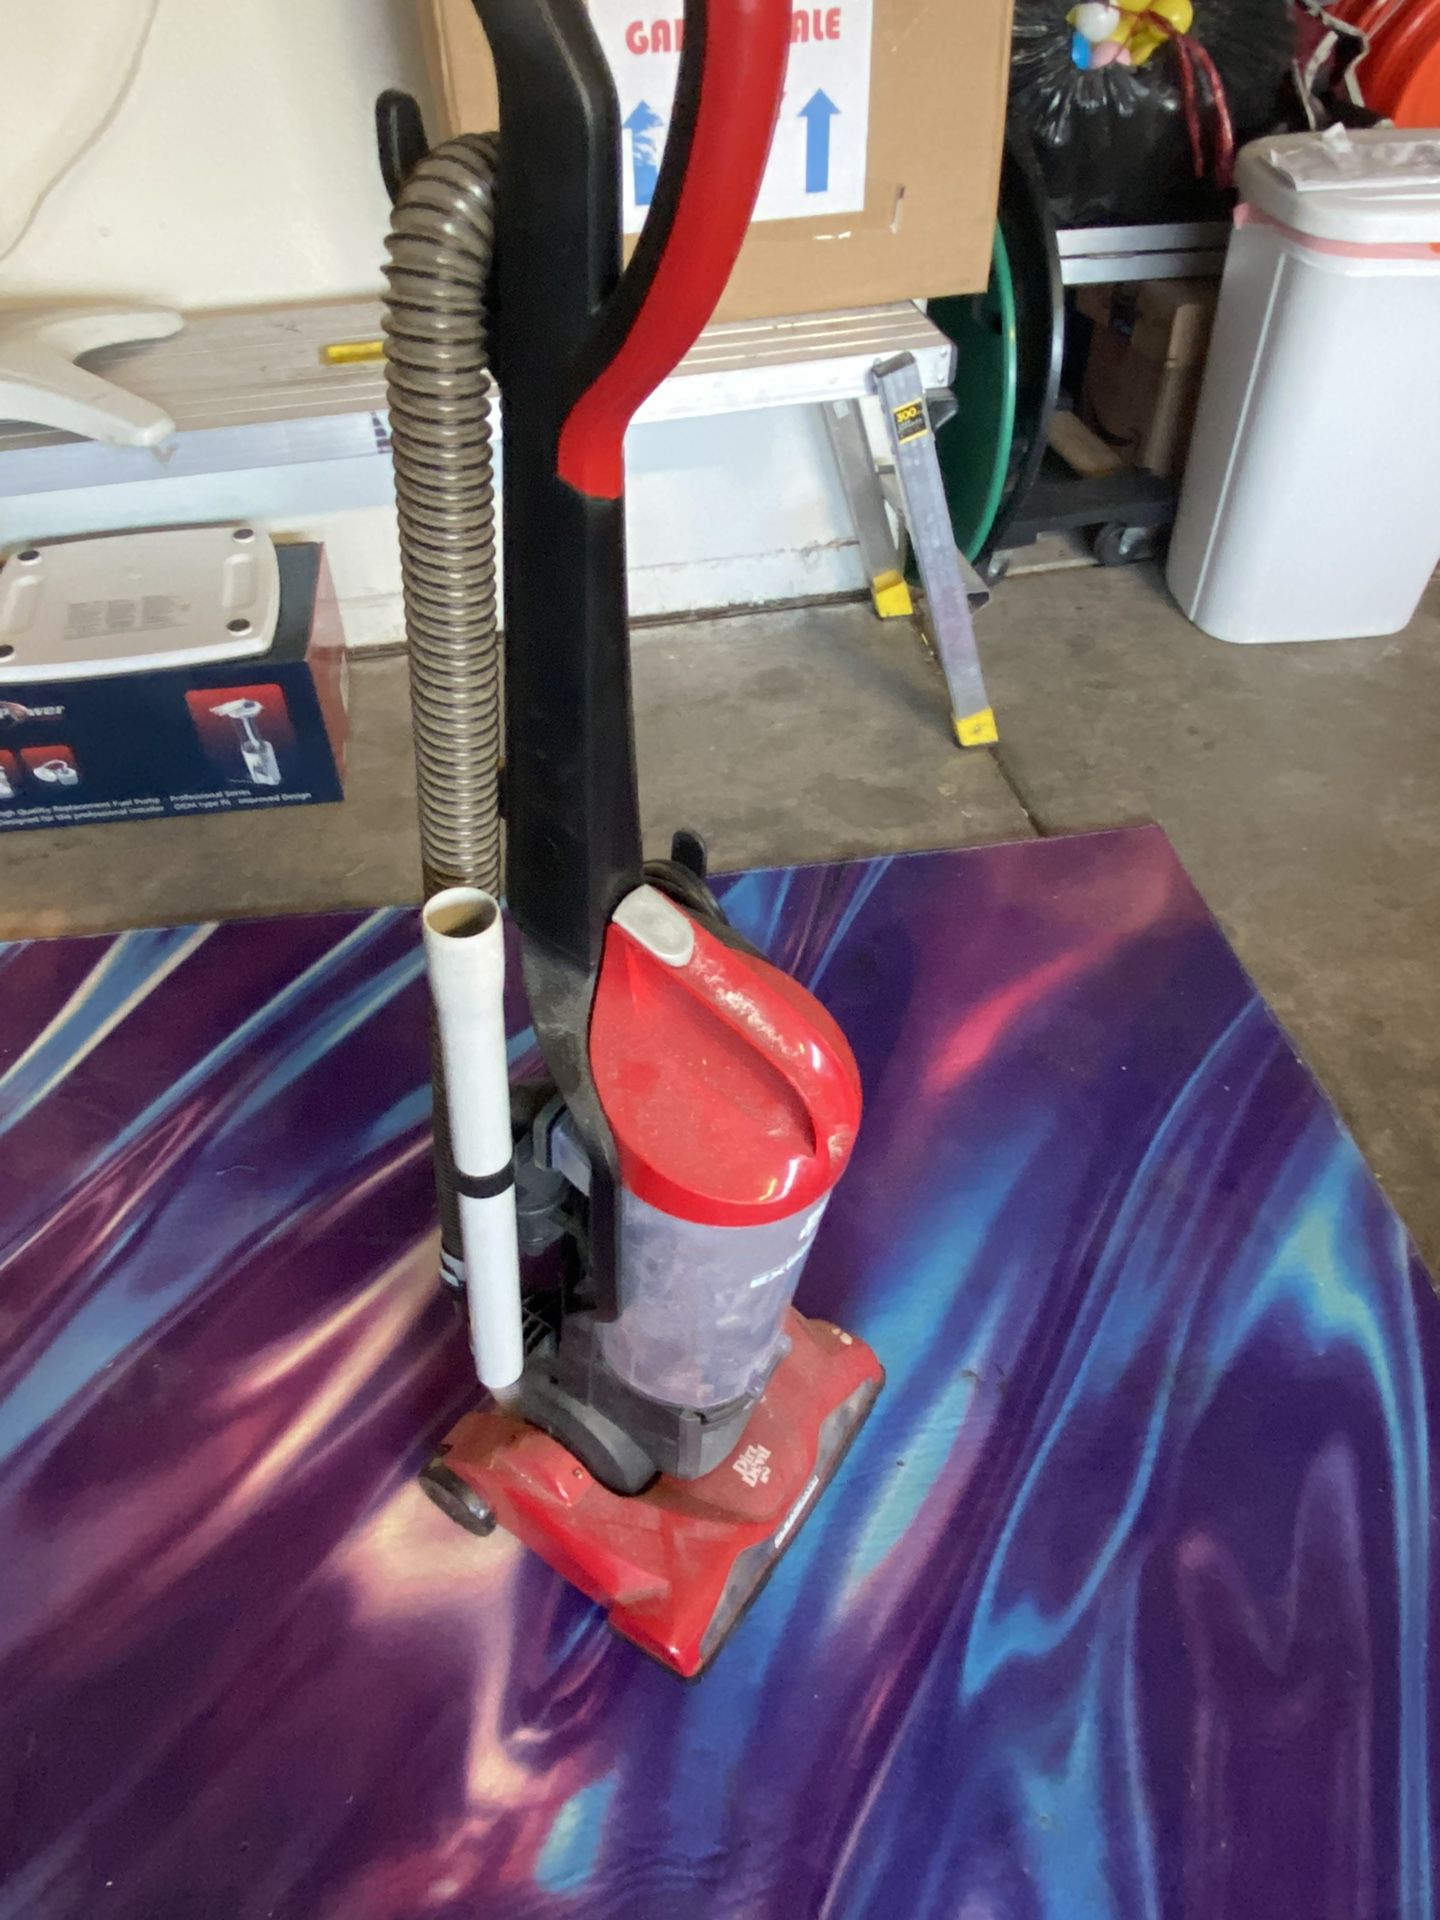 Ziploc Vacuum Sealer for Sale in Las Vegas, NV - OfferUp